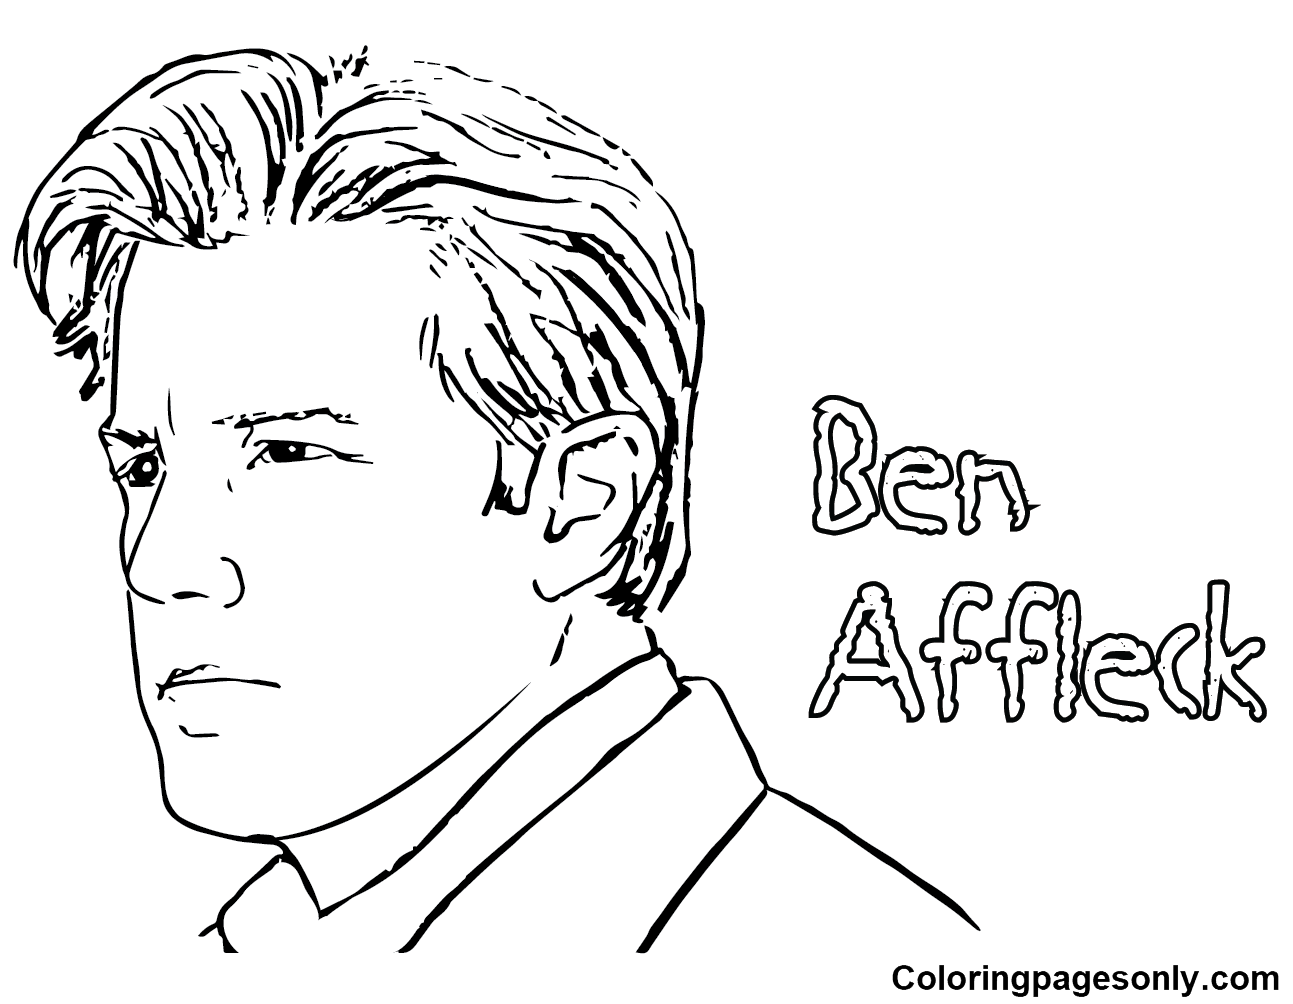 Free Ben Affleck Coloring Page